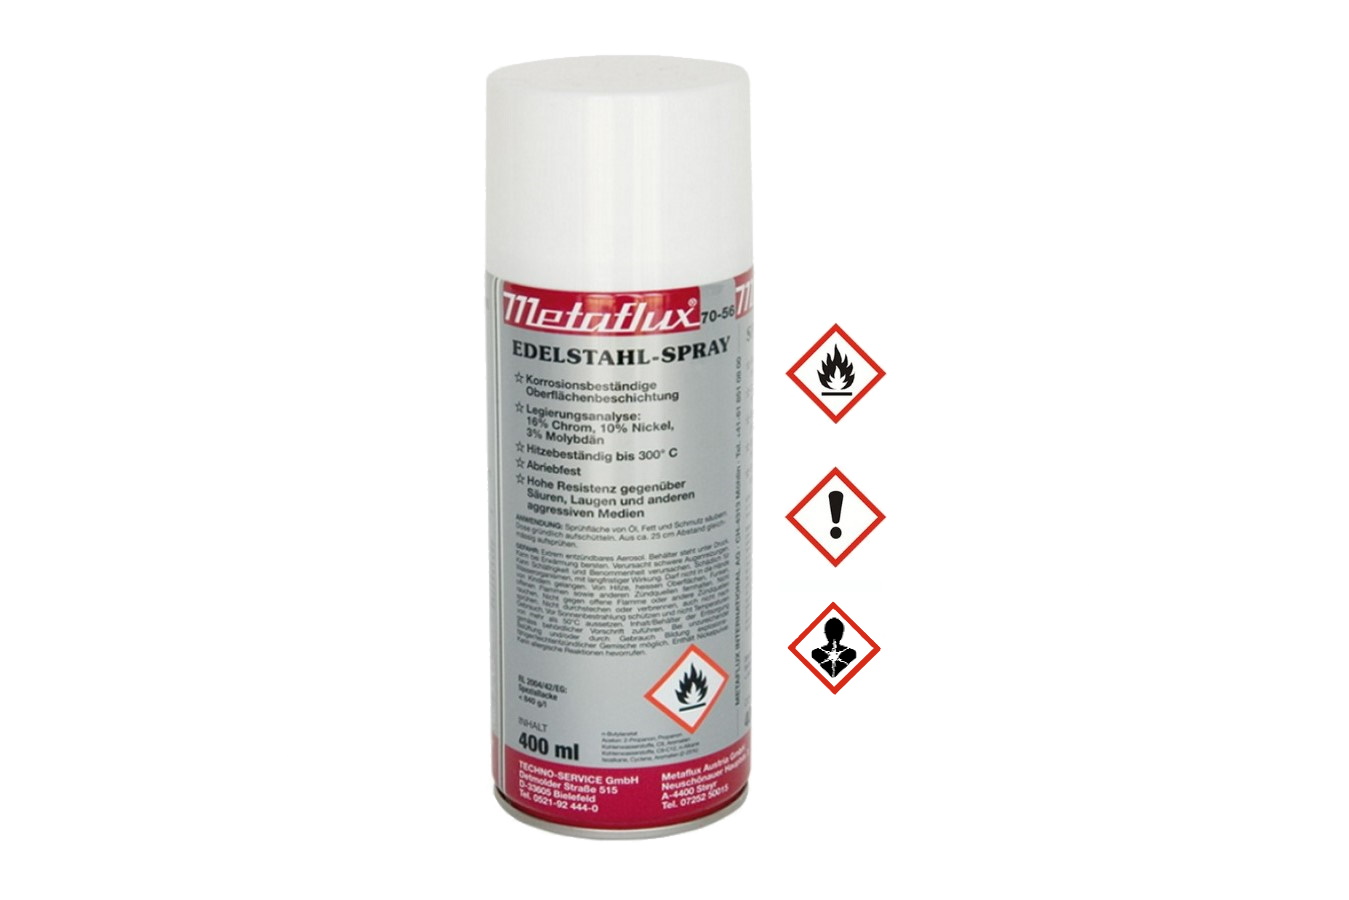 Edelstahl-Spray 400ml Metaflux | 70-5600